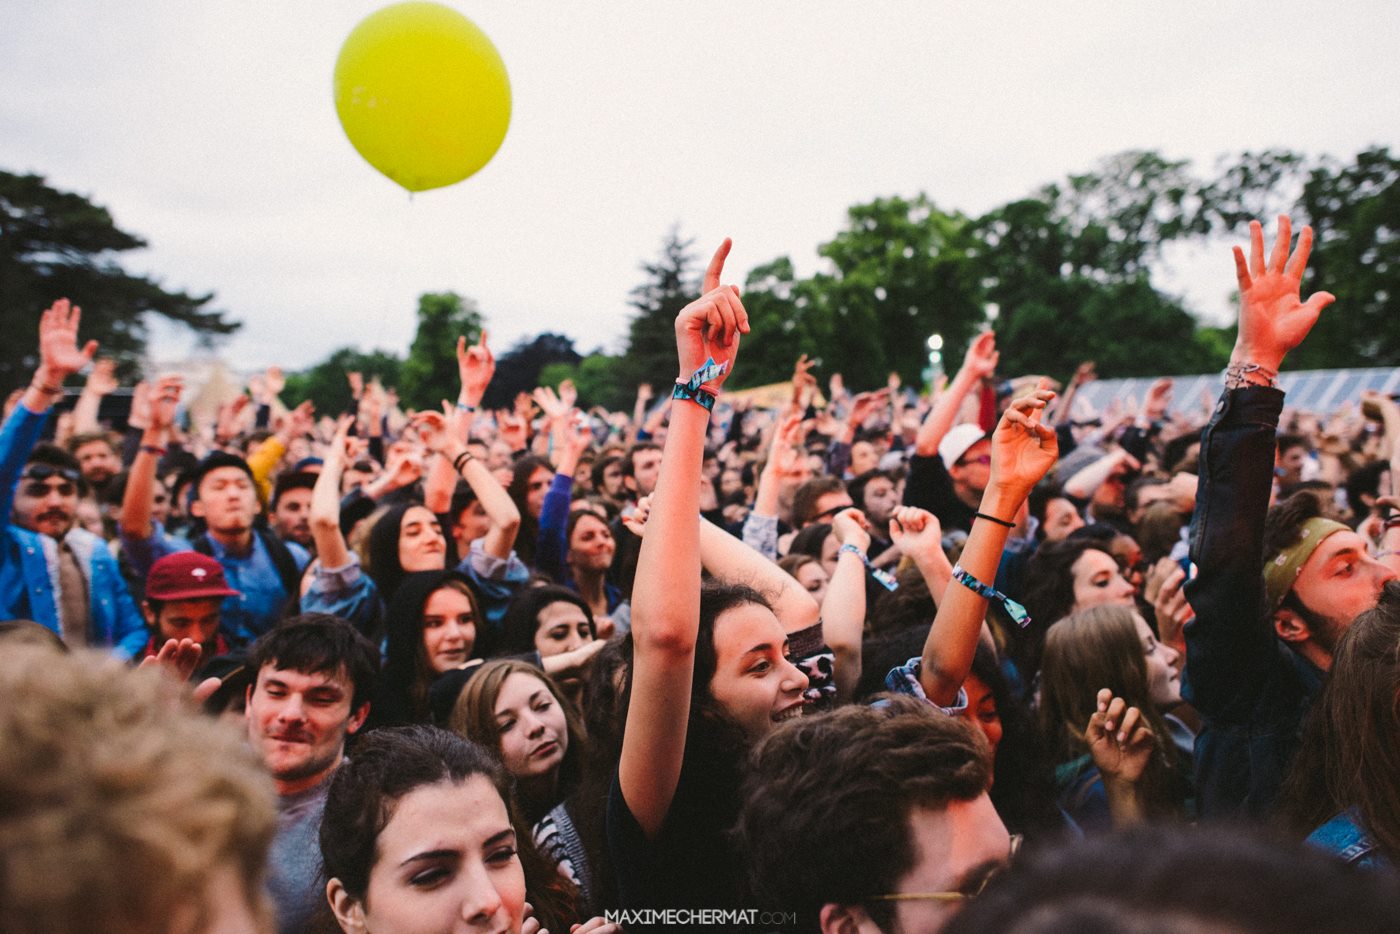 Crowd / We Love Green Festival / Maxime Chermat